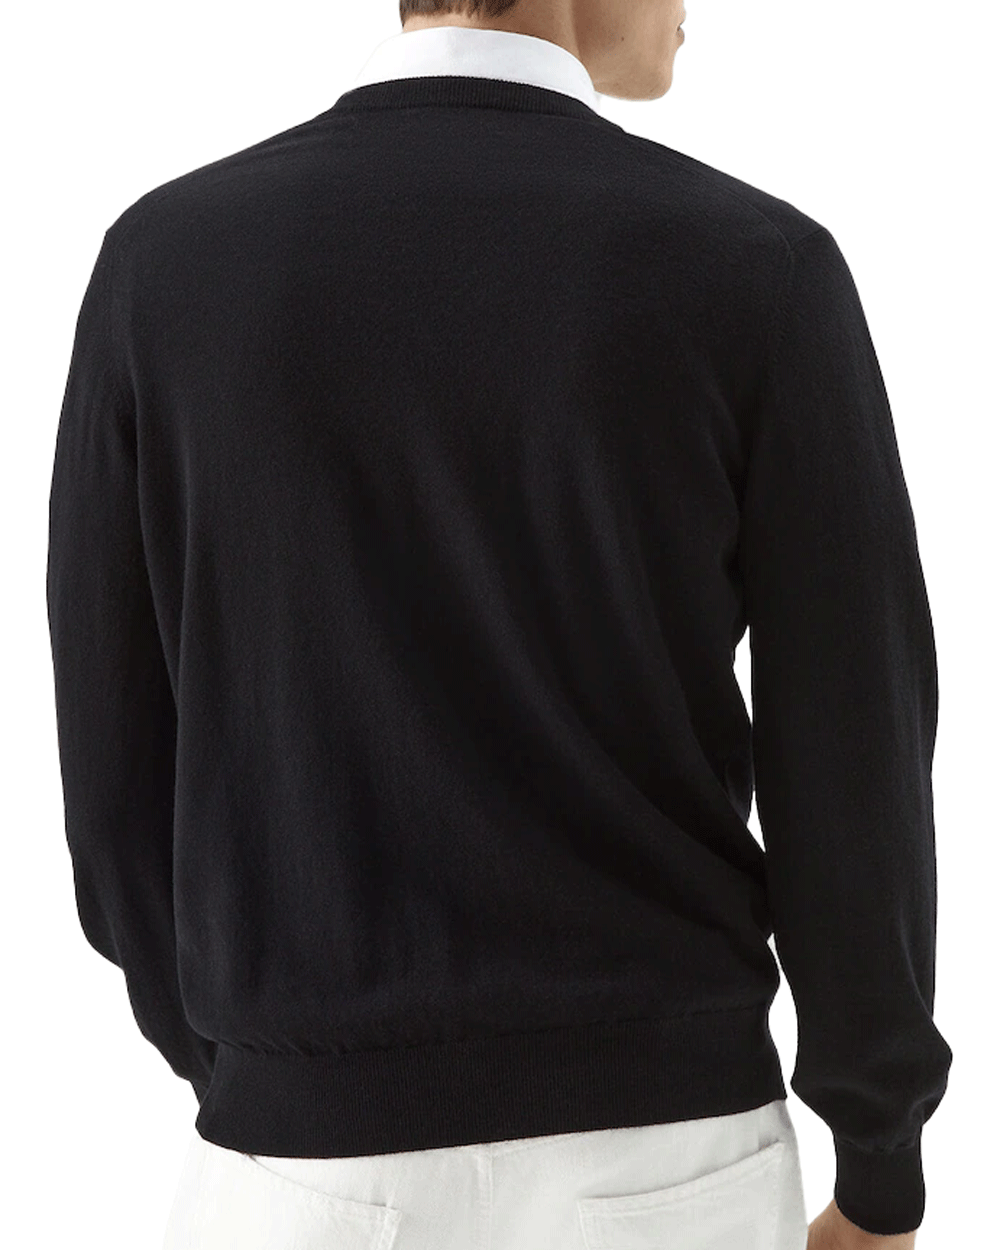 Black V-Neck Cashmere Sweater